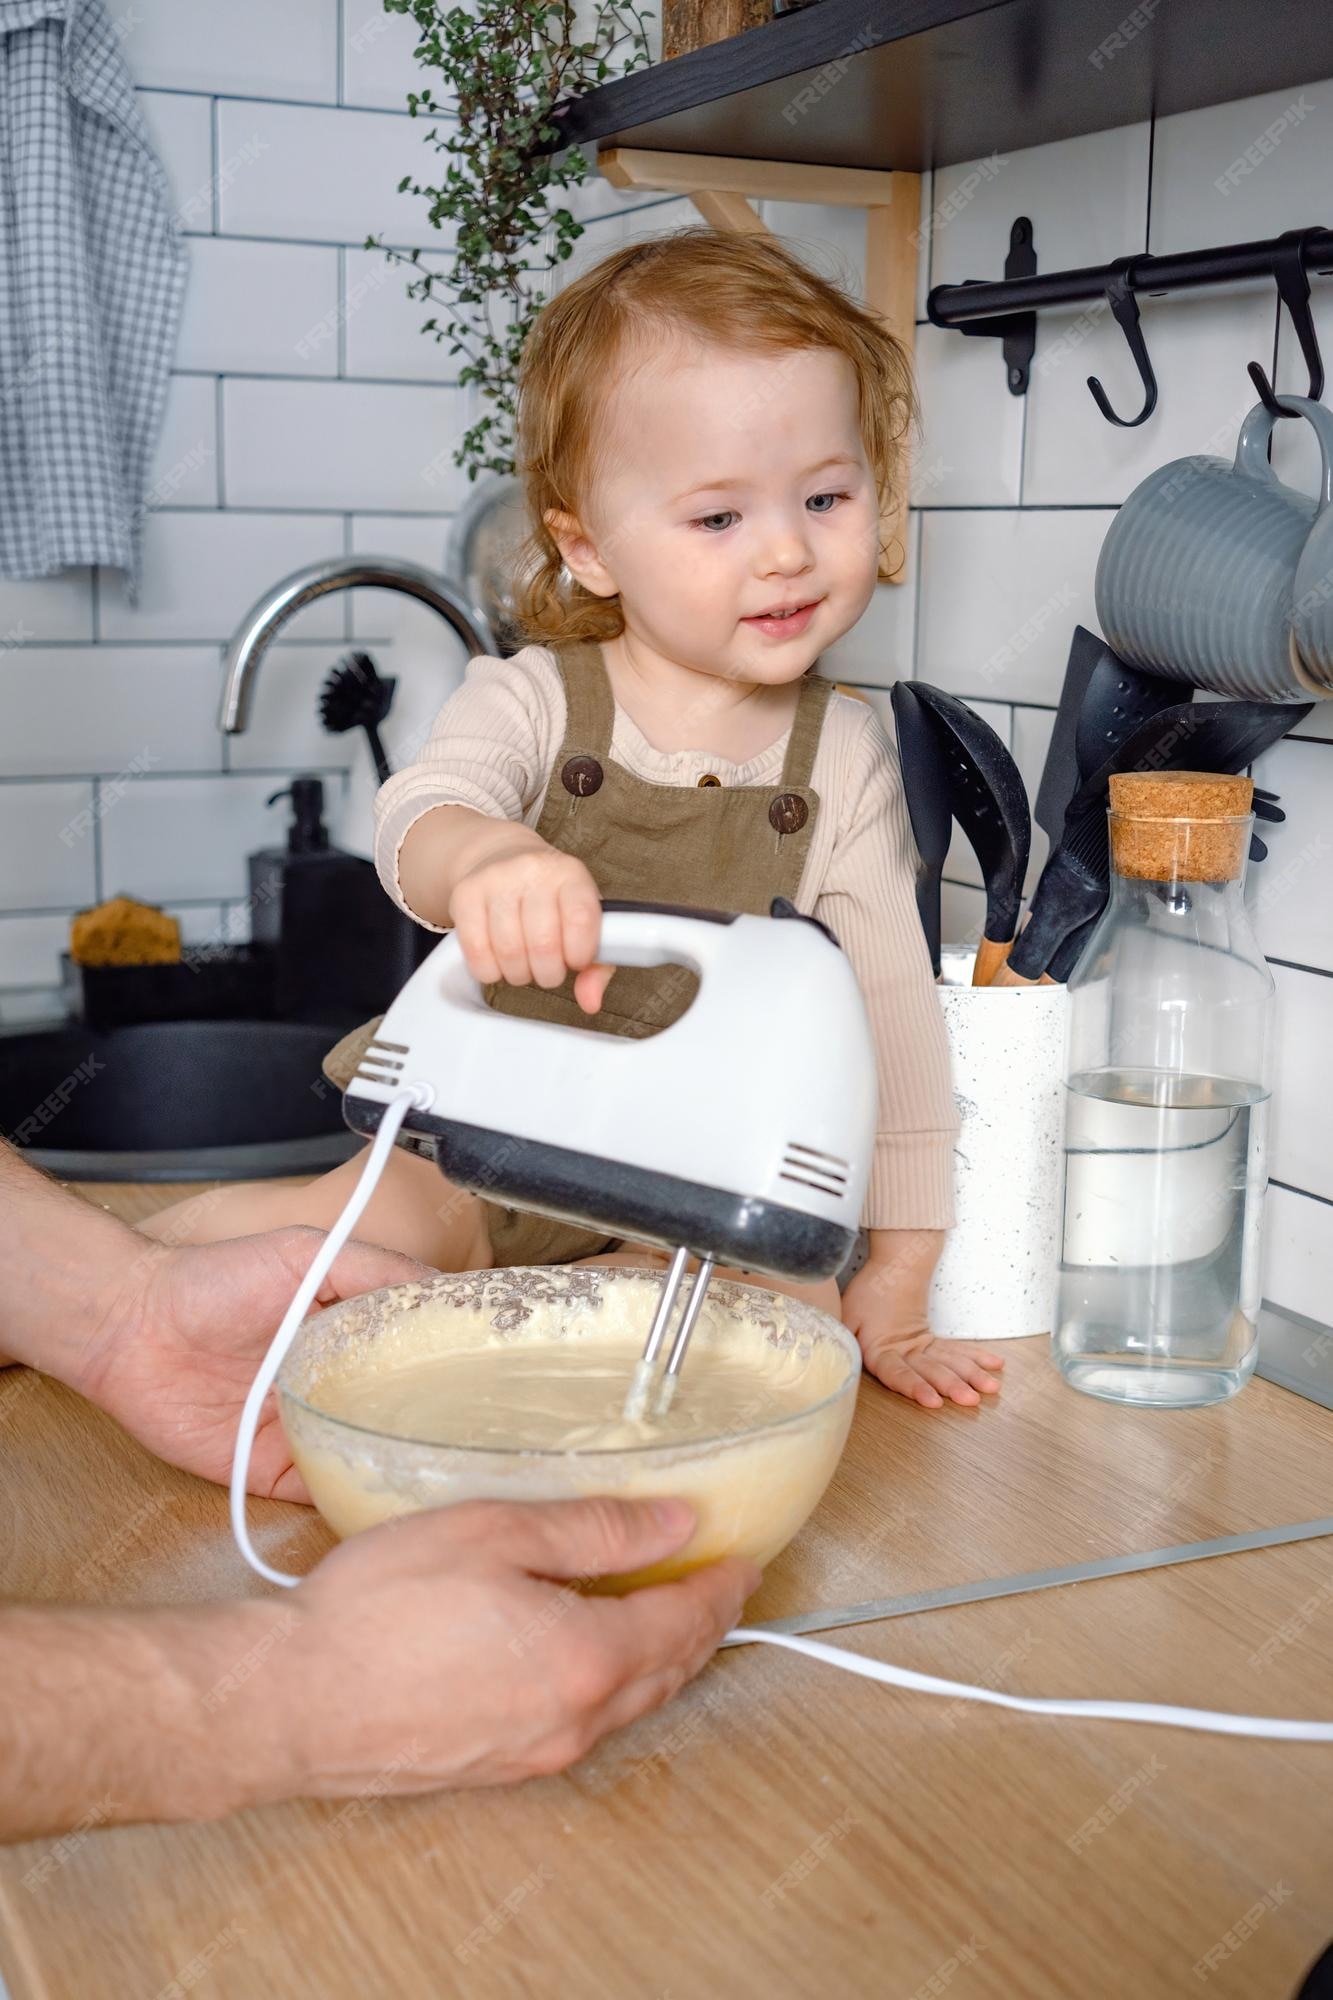 https://img.freepik.com/premium-photo/funny-cute-toddler-mixing-ingredients-using-blender-helping-father-kid-learning-cook_556186-478.jpg?w=2000